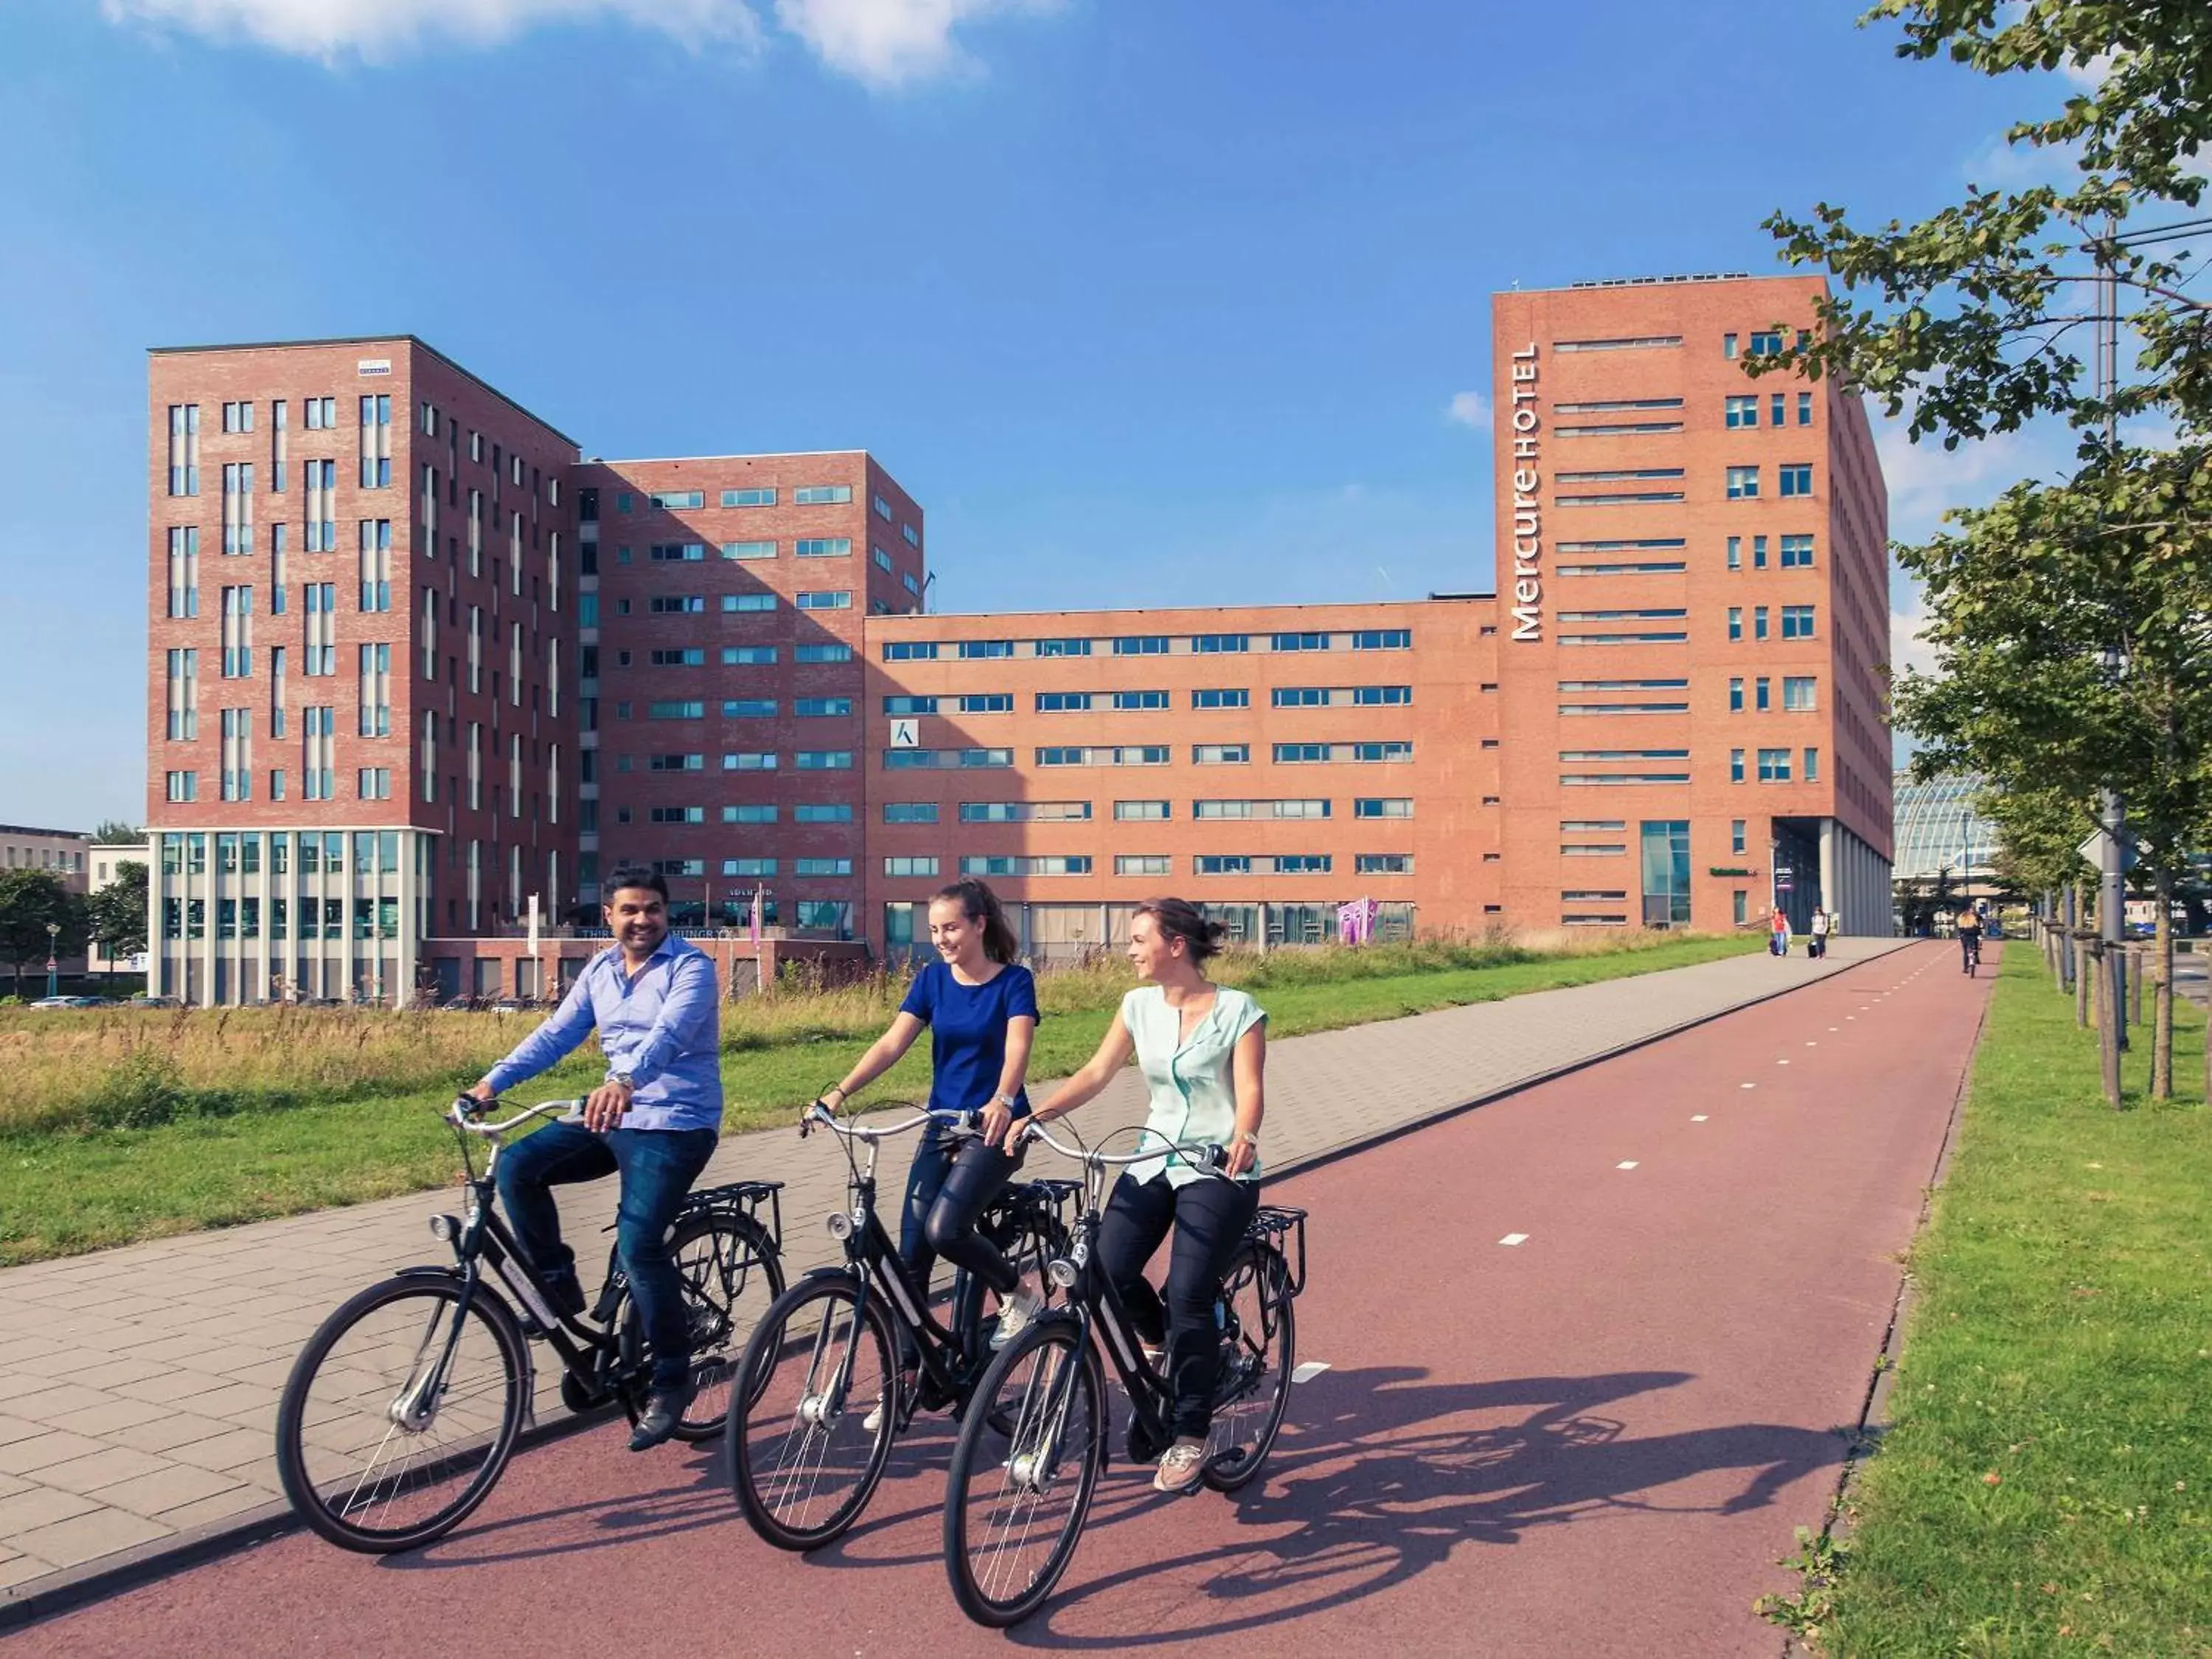 On site, Biking in Mercure Amsterdam Sloterdijk Station